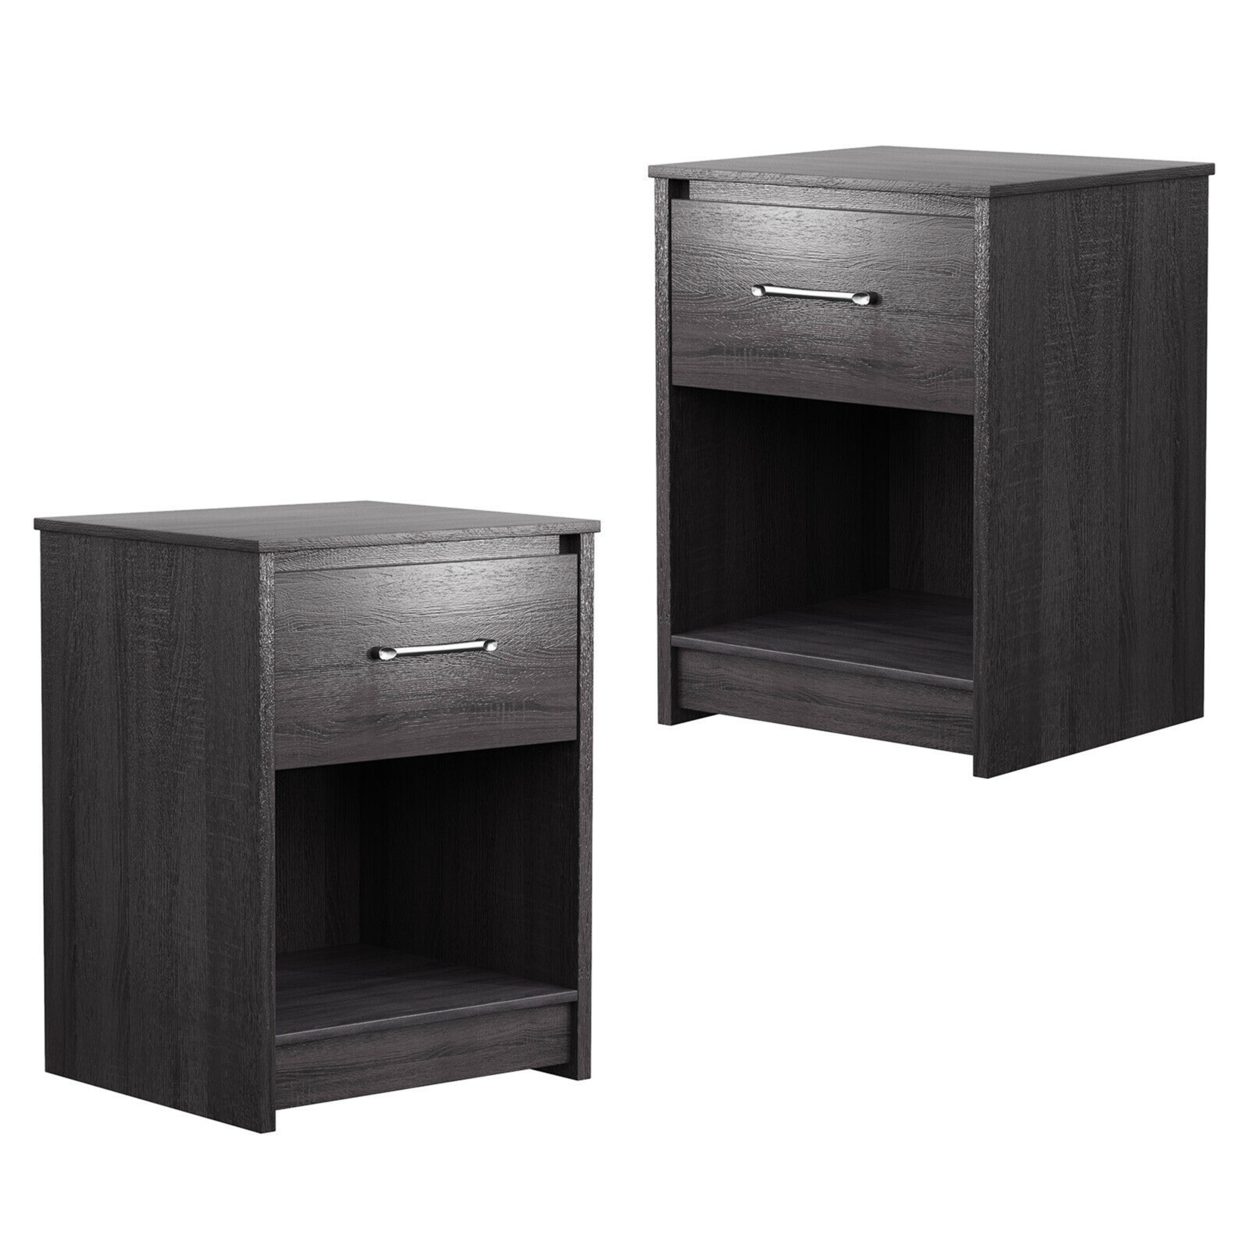 2PCS Nightstand With Drawer Storage Shelf Wooden End Side Table Bedroom Brown / Black / Natiral - Black